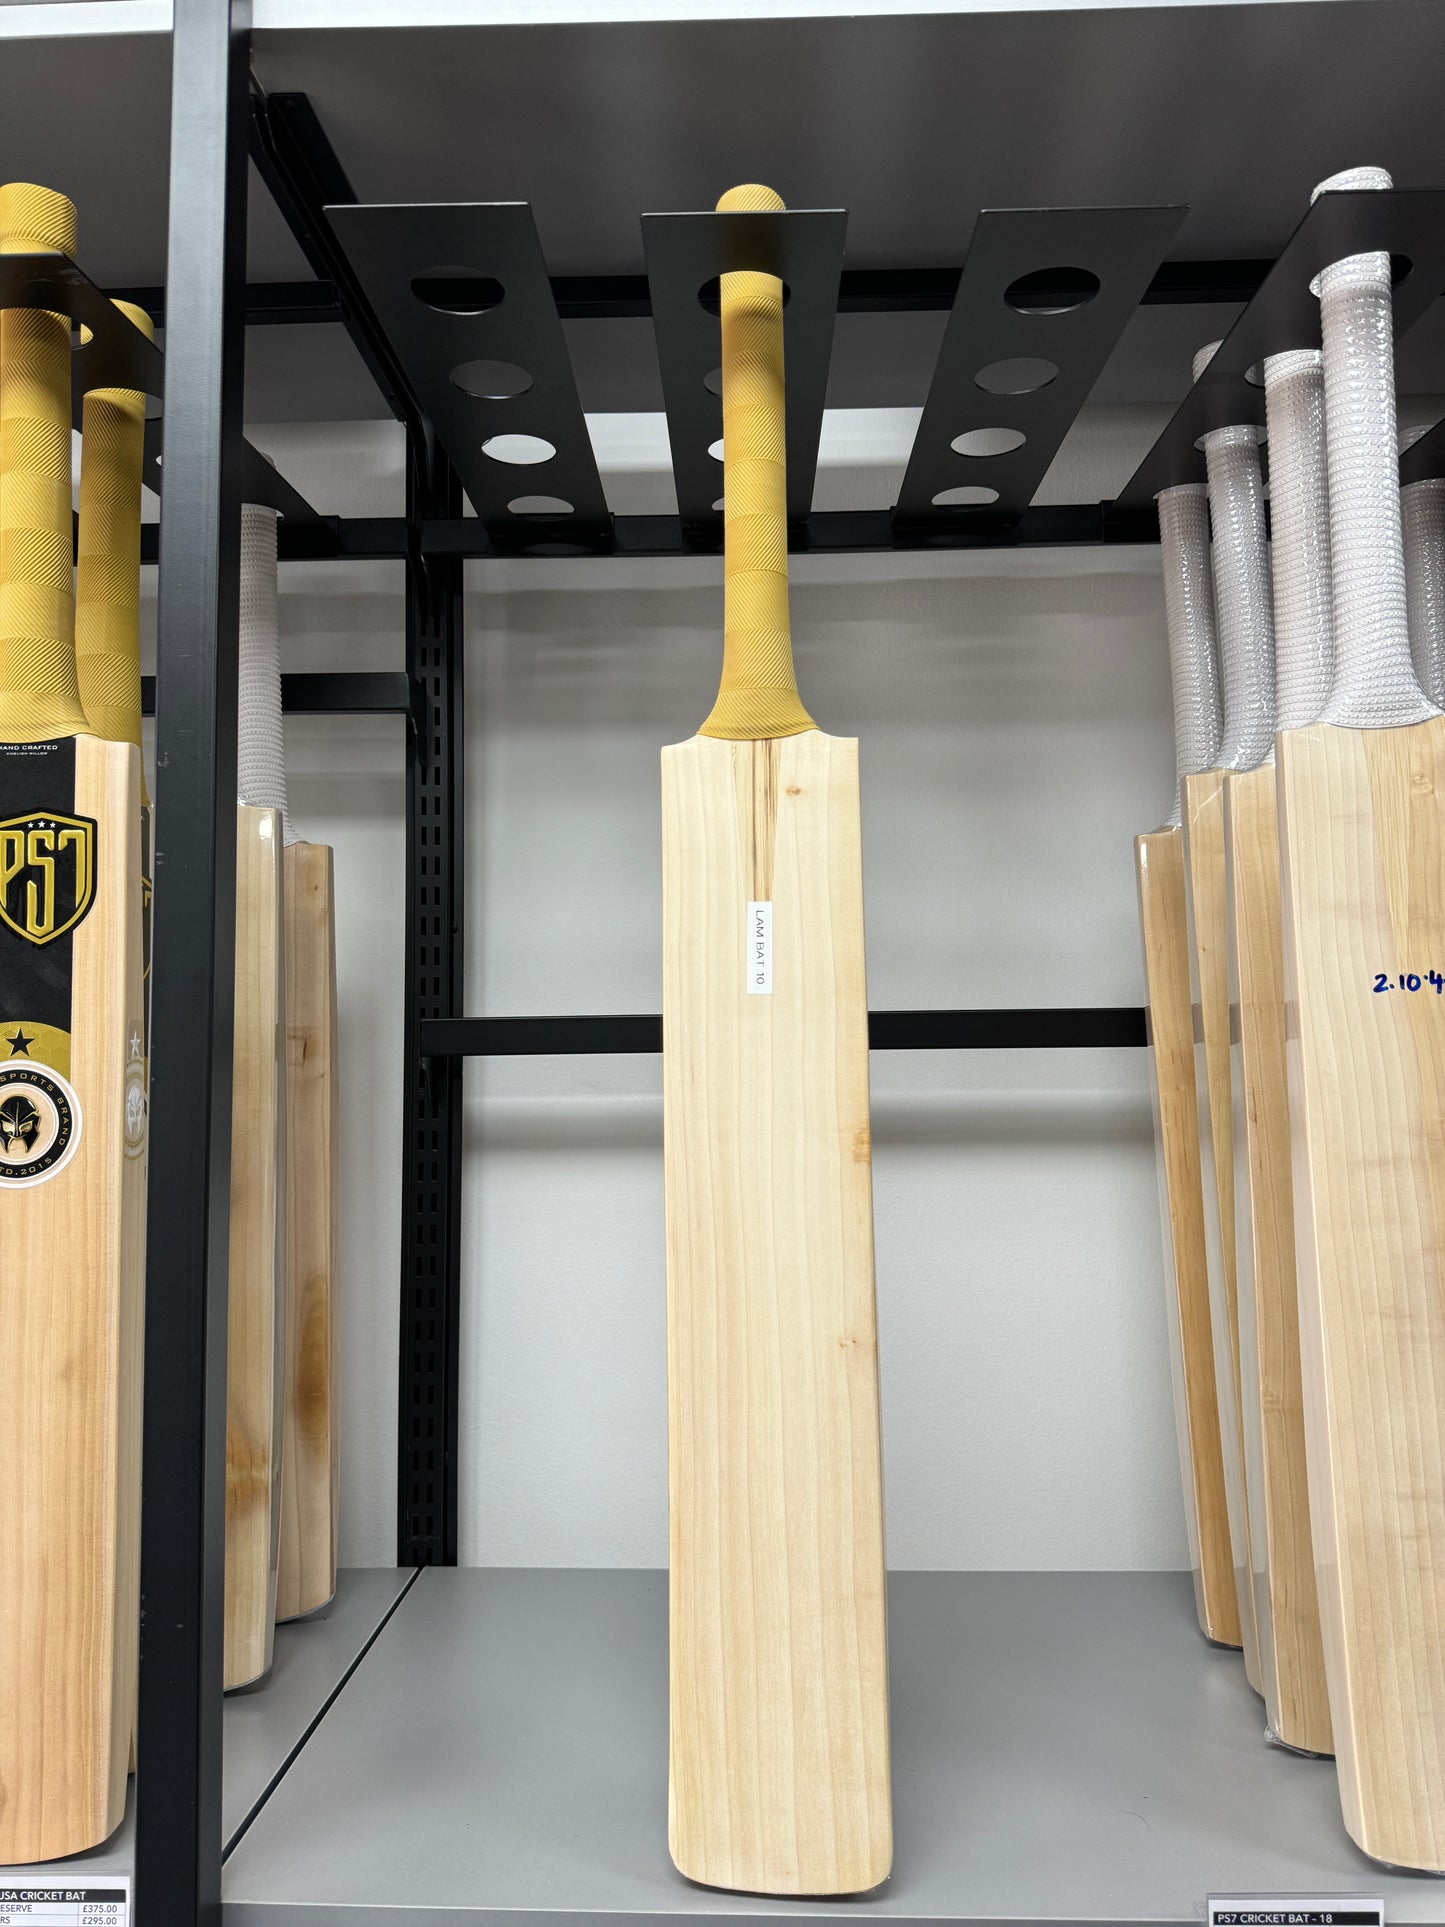 Performance Laminated Cricket Bat 10 – Players Grade 2lb 10oz